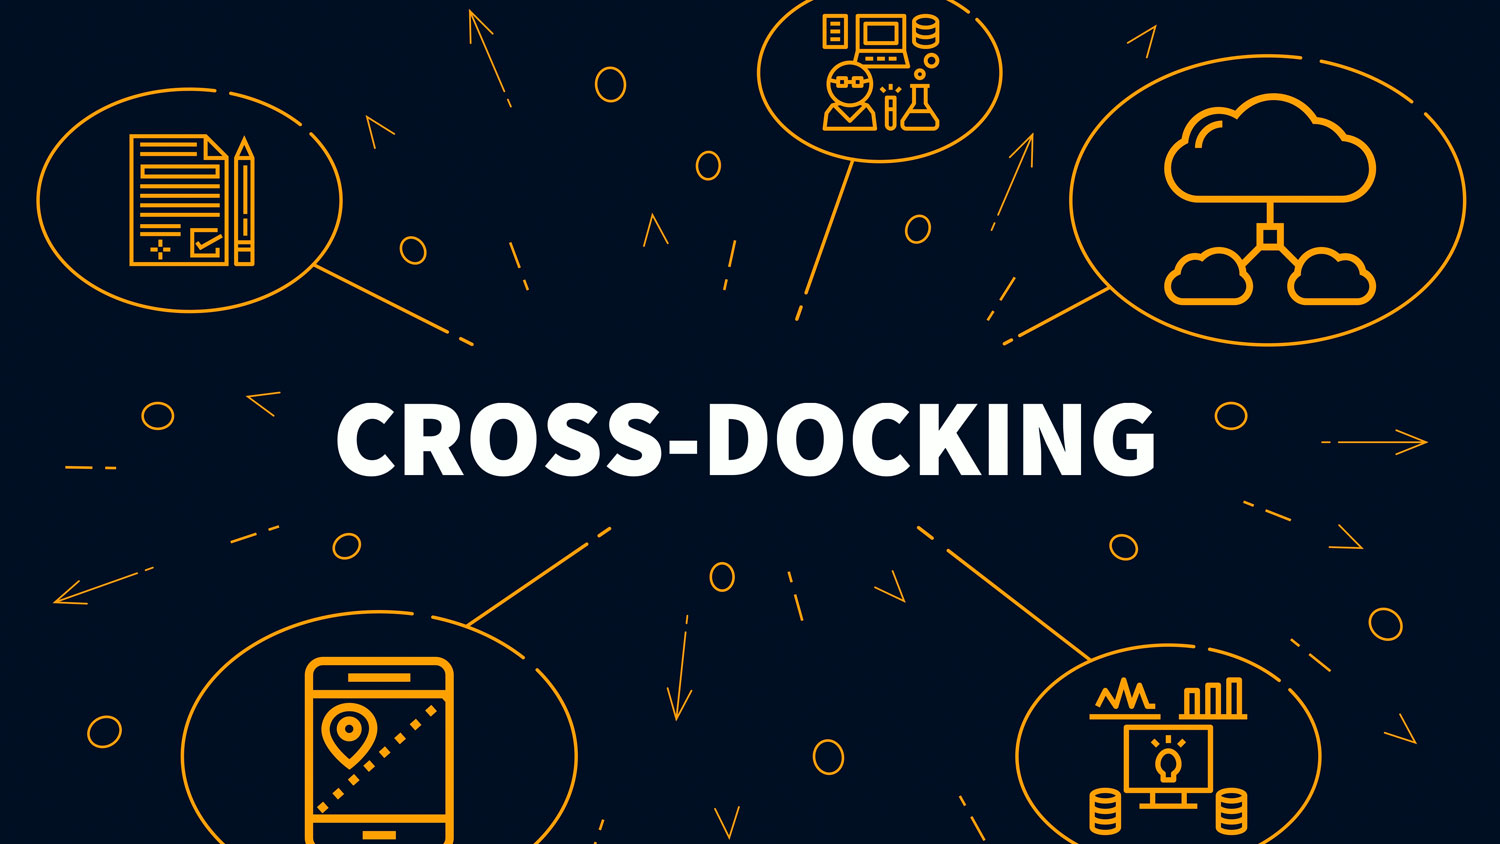 cross-docking